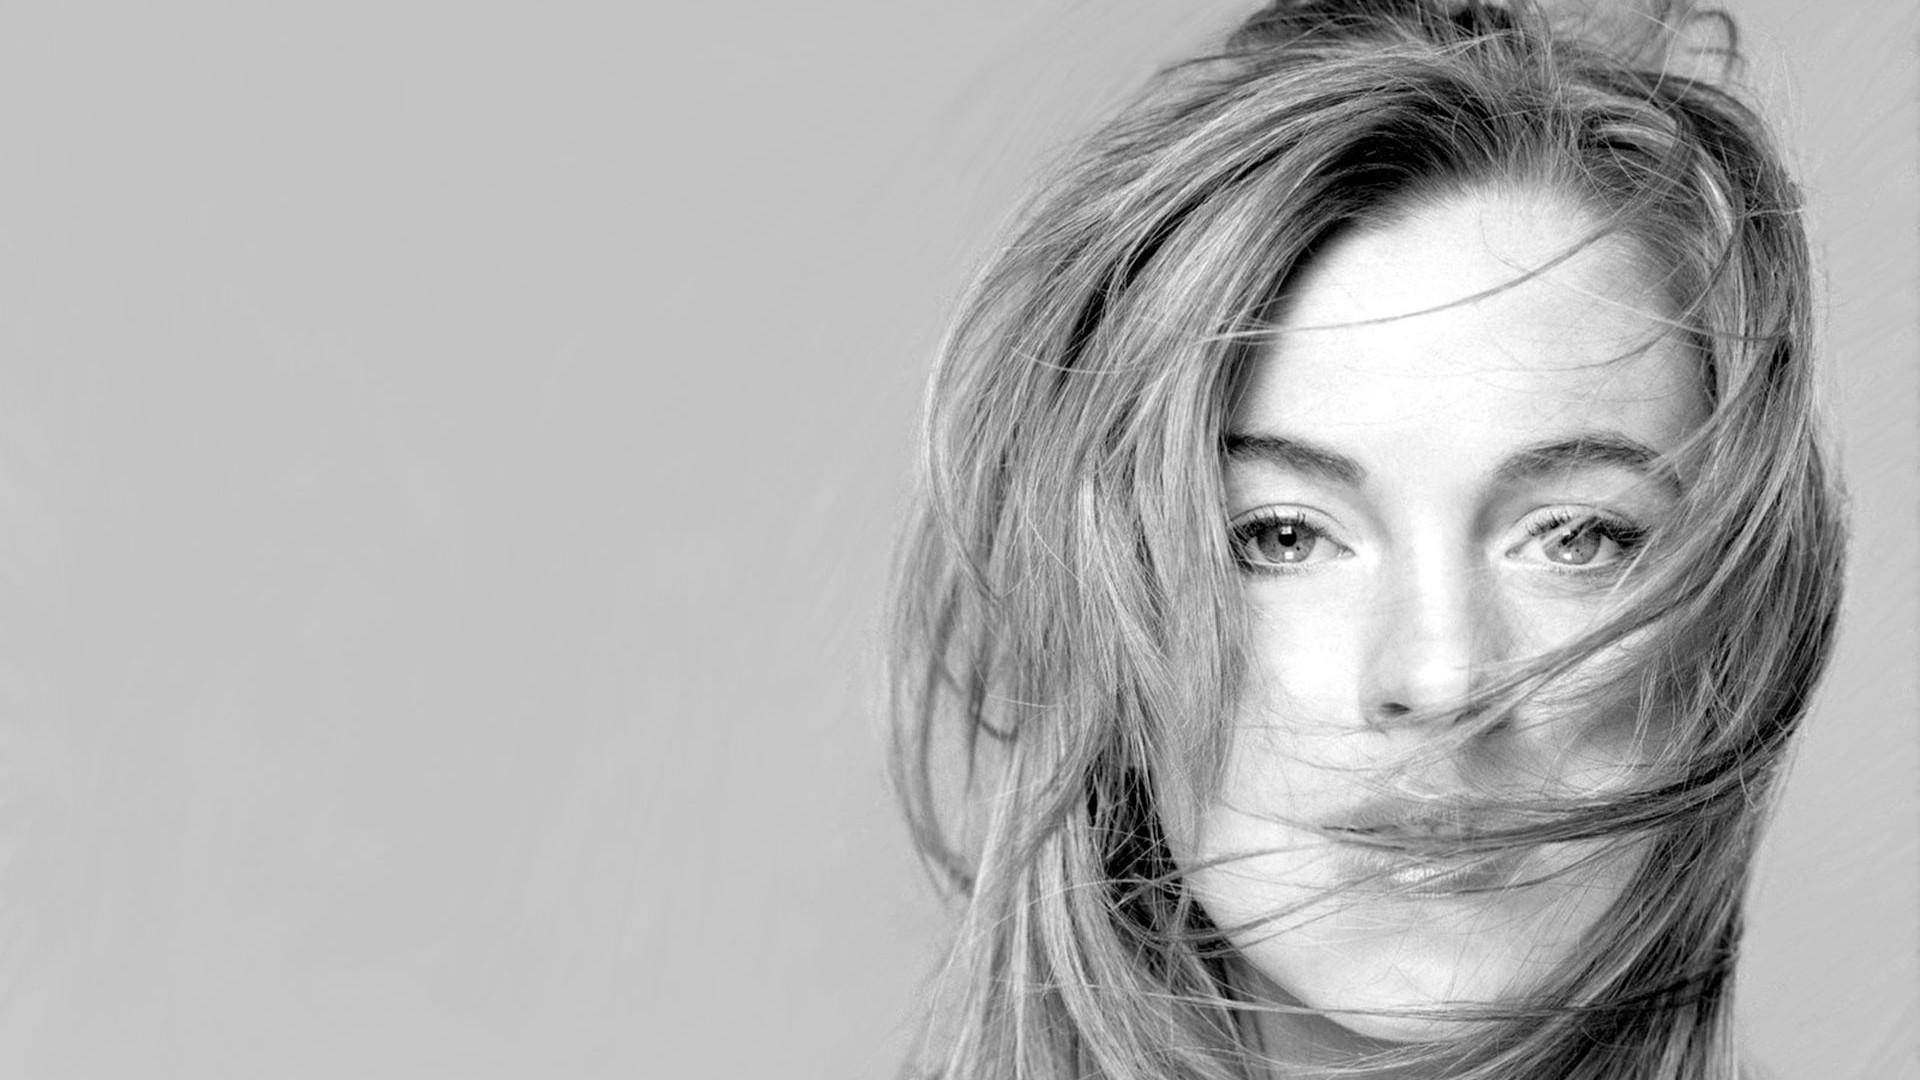 Monochromatic Lindsay Lohan